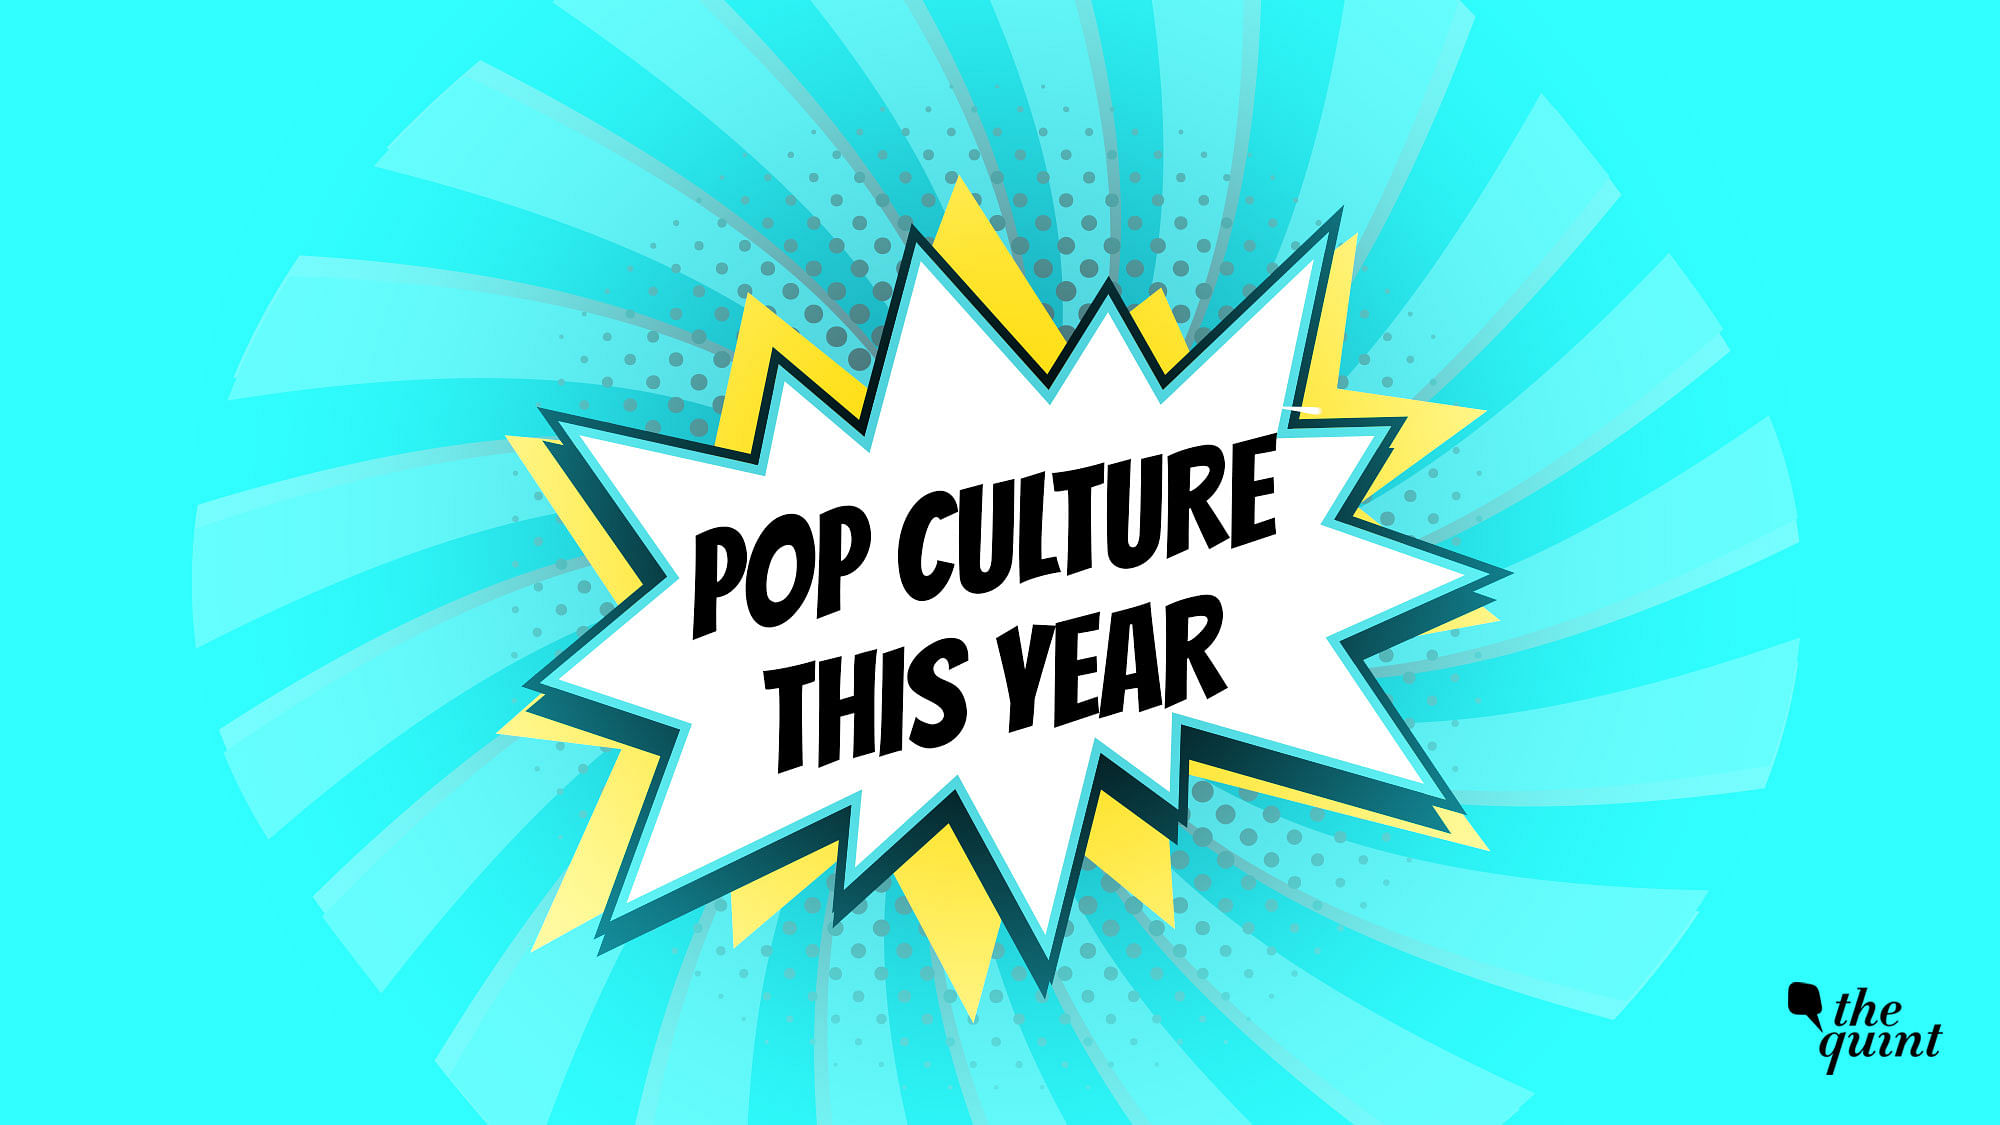 Popular Pop Culture 2018 From KiKi Challenge to Shoefie, Top Trends of